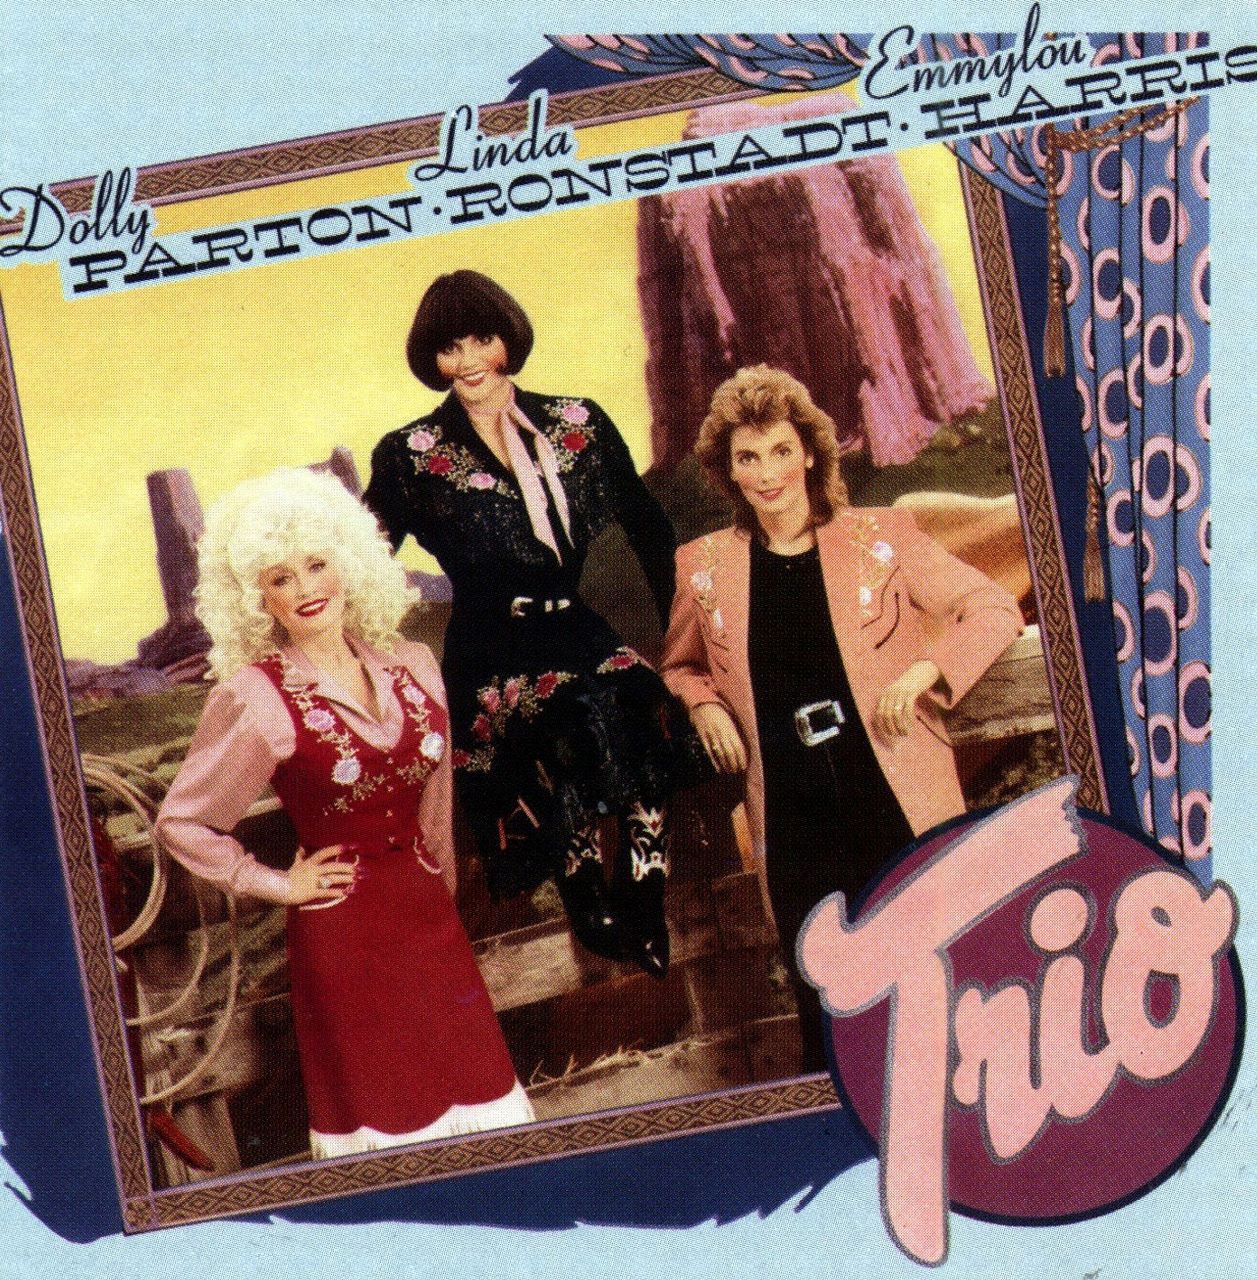 Dolly Parton, Linda Ronstadt, Emmylou Harris – Trio cover album